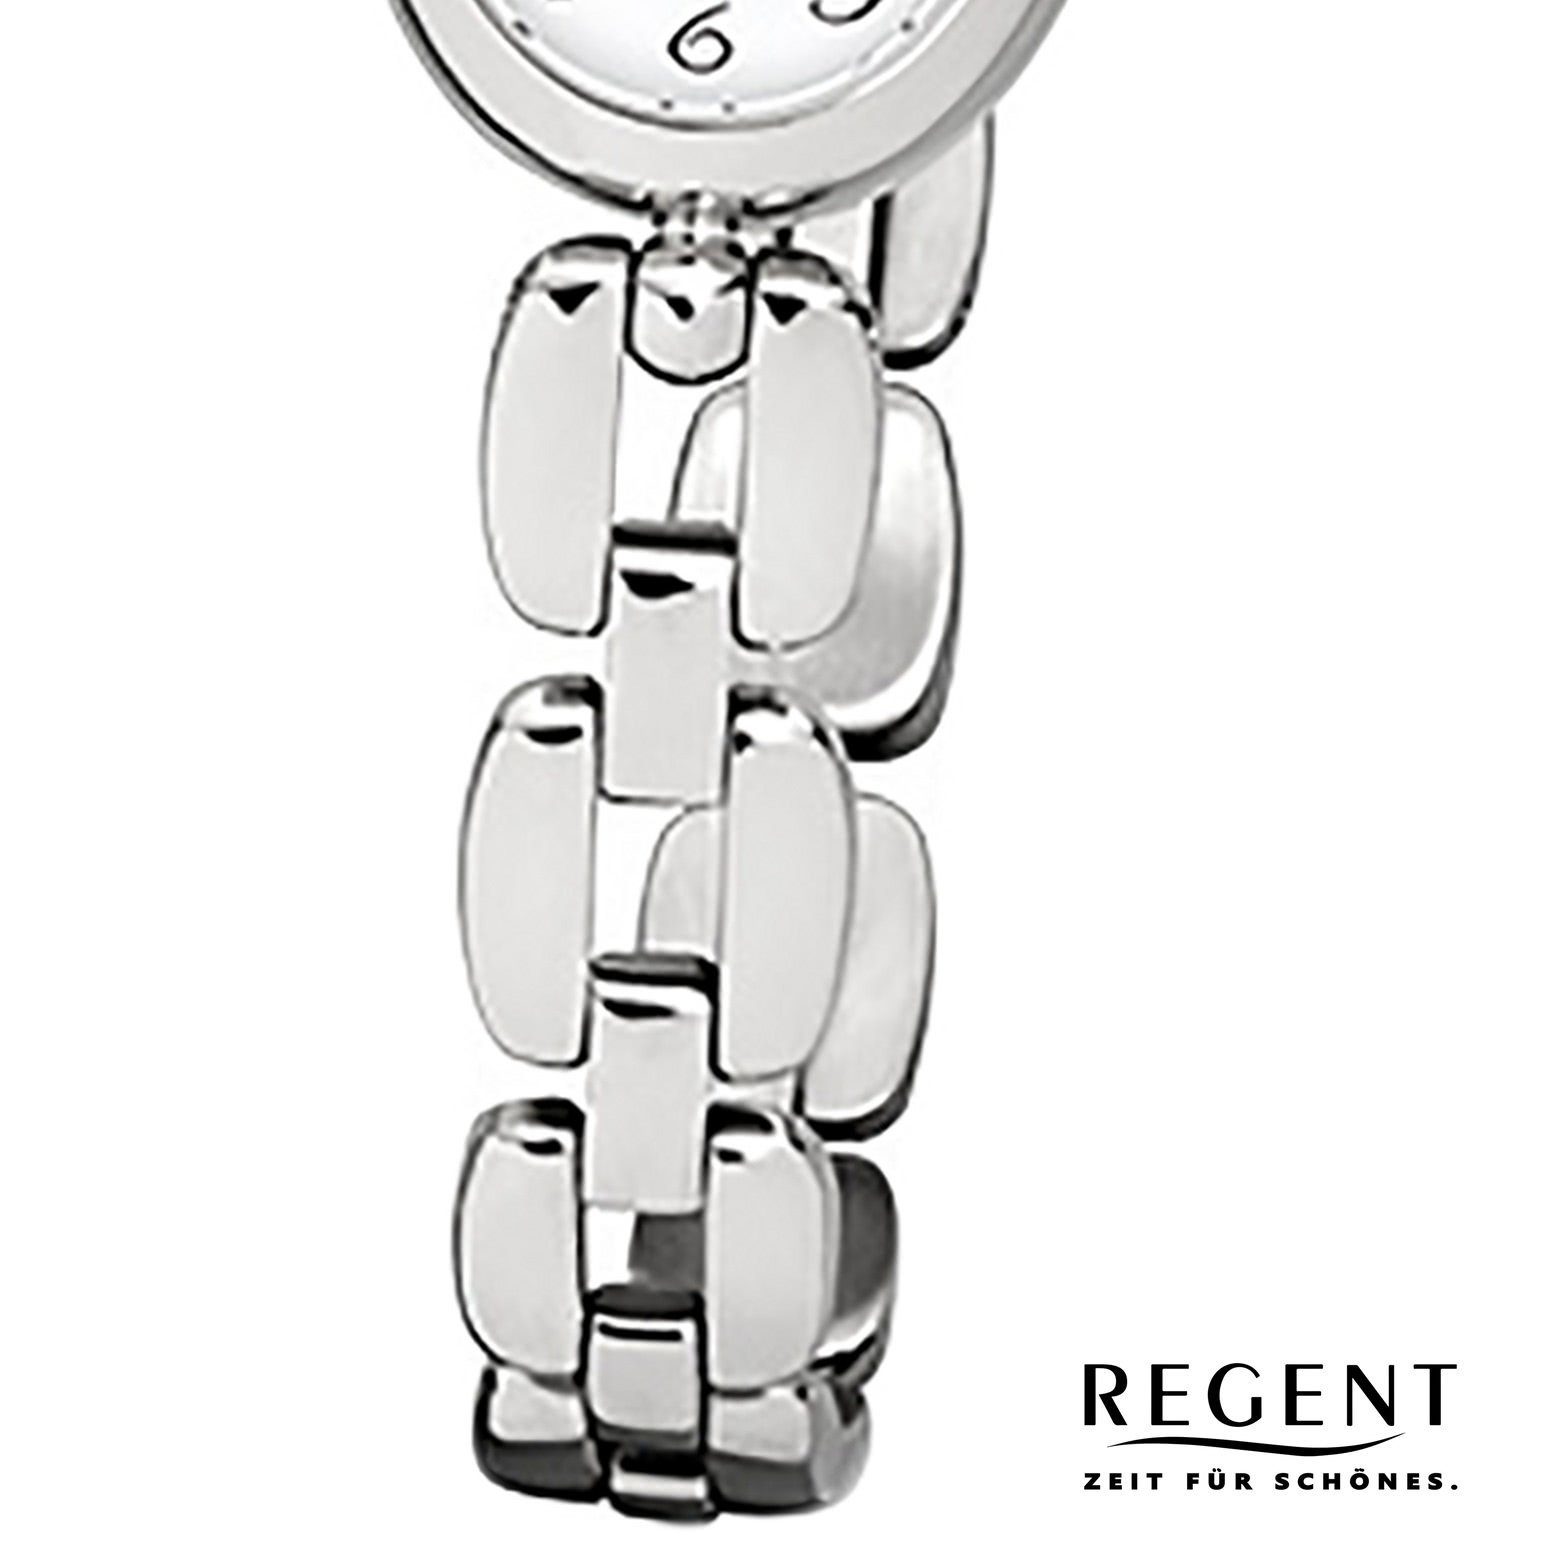 Regent Quarzuhr Edelstahlarmband Regent silber Analog Damen oval, Armbanduhr 19x16mm), F-966, (ca. Damen-Armbanduhr klein